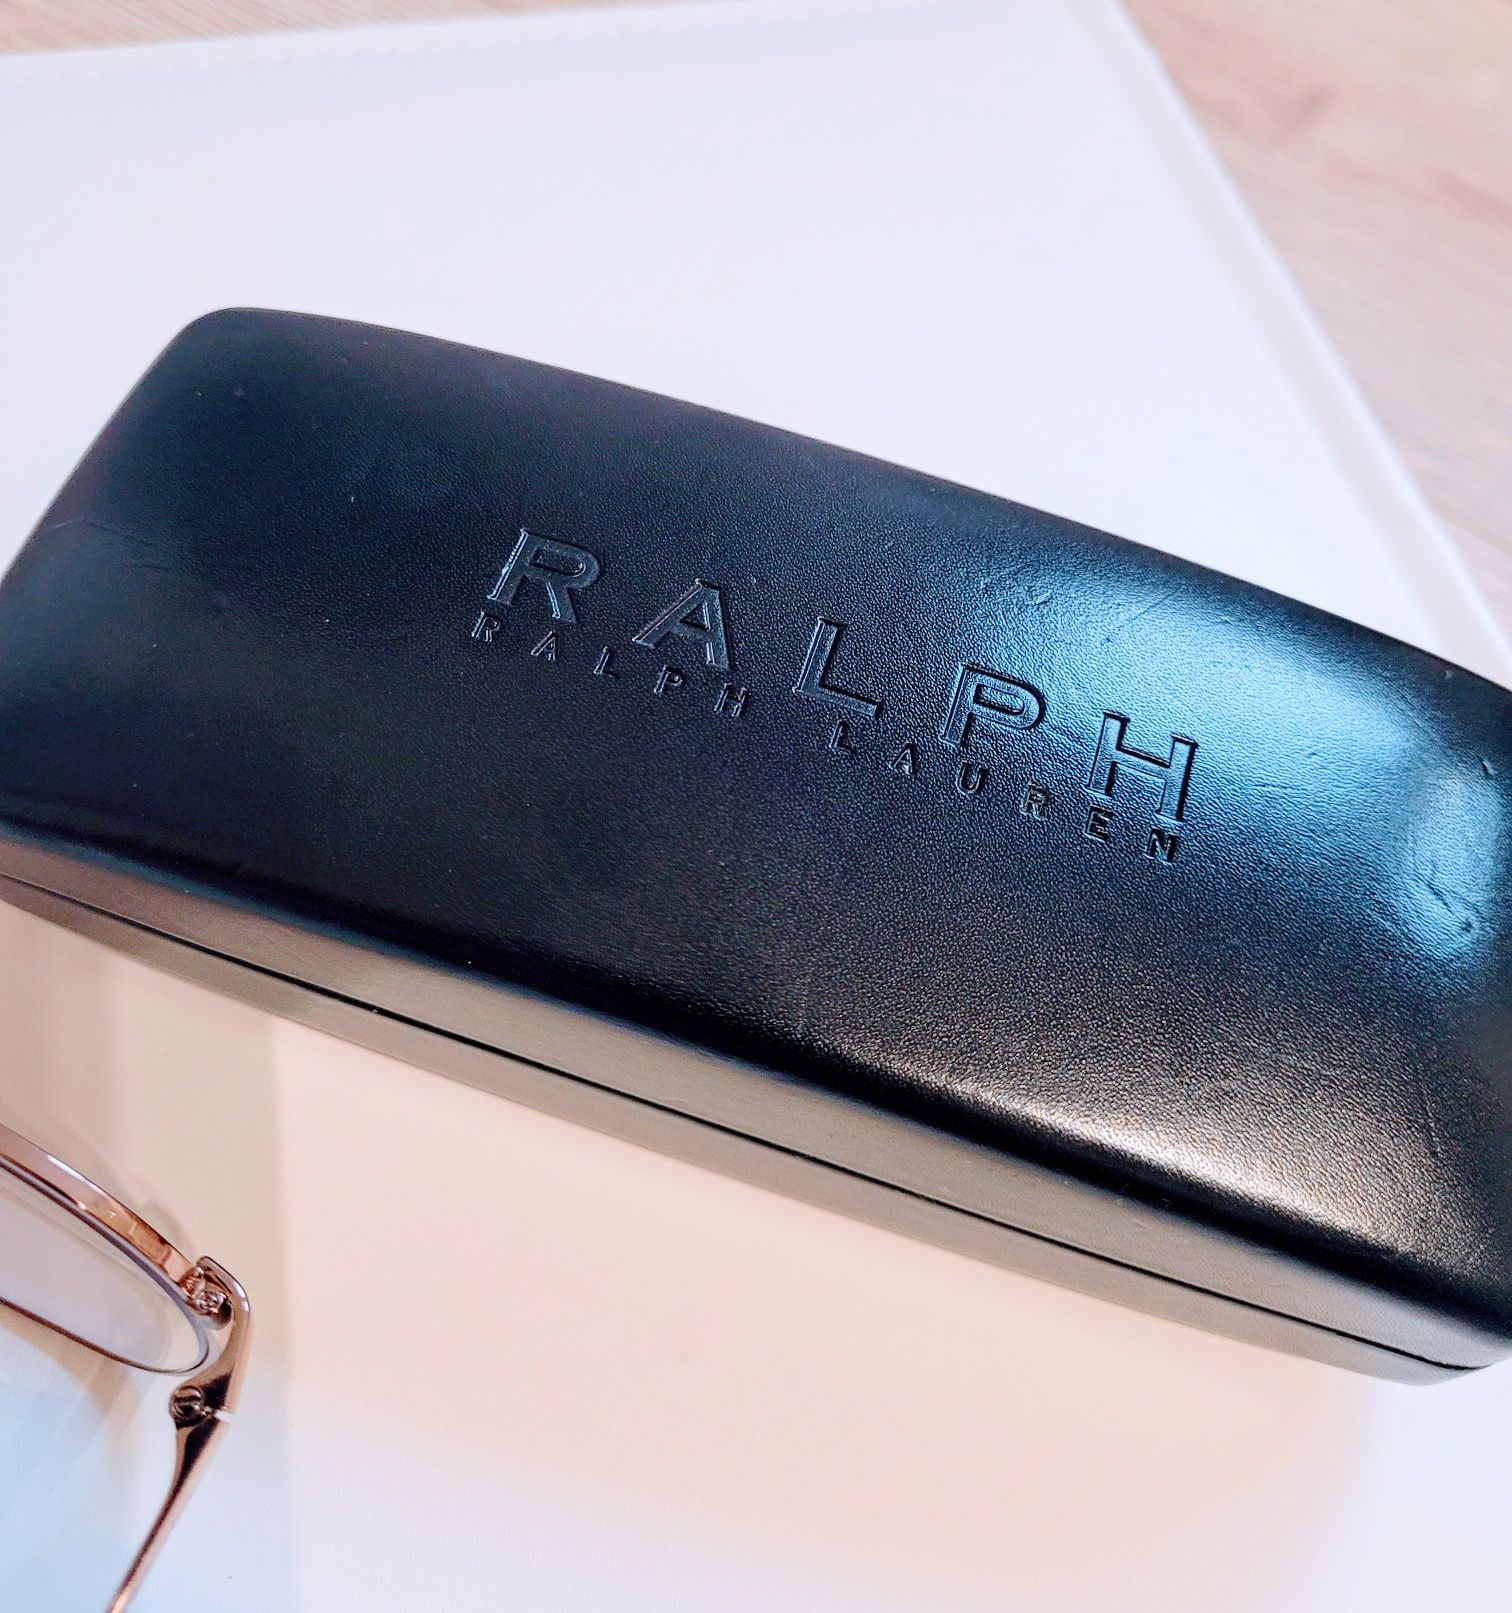 Okulary Ralph by Ralph Lauren + Blue Cut + antyrefleks + relaks